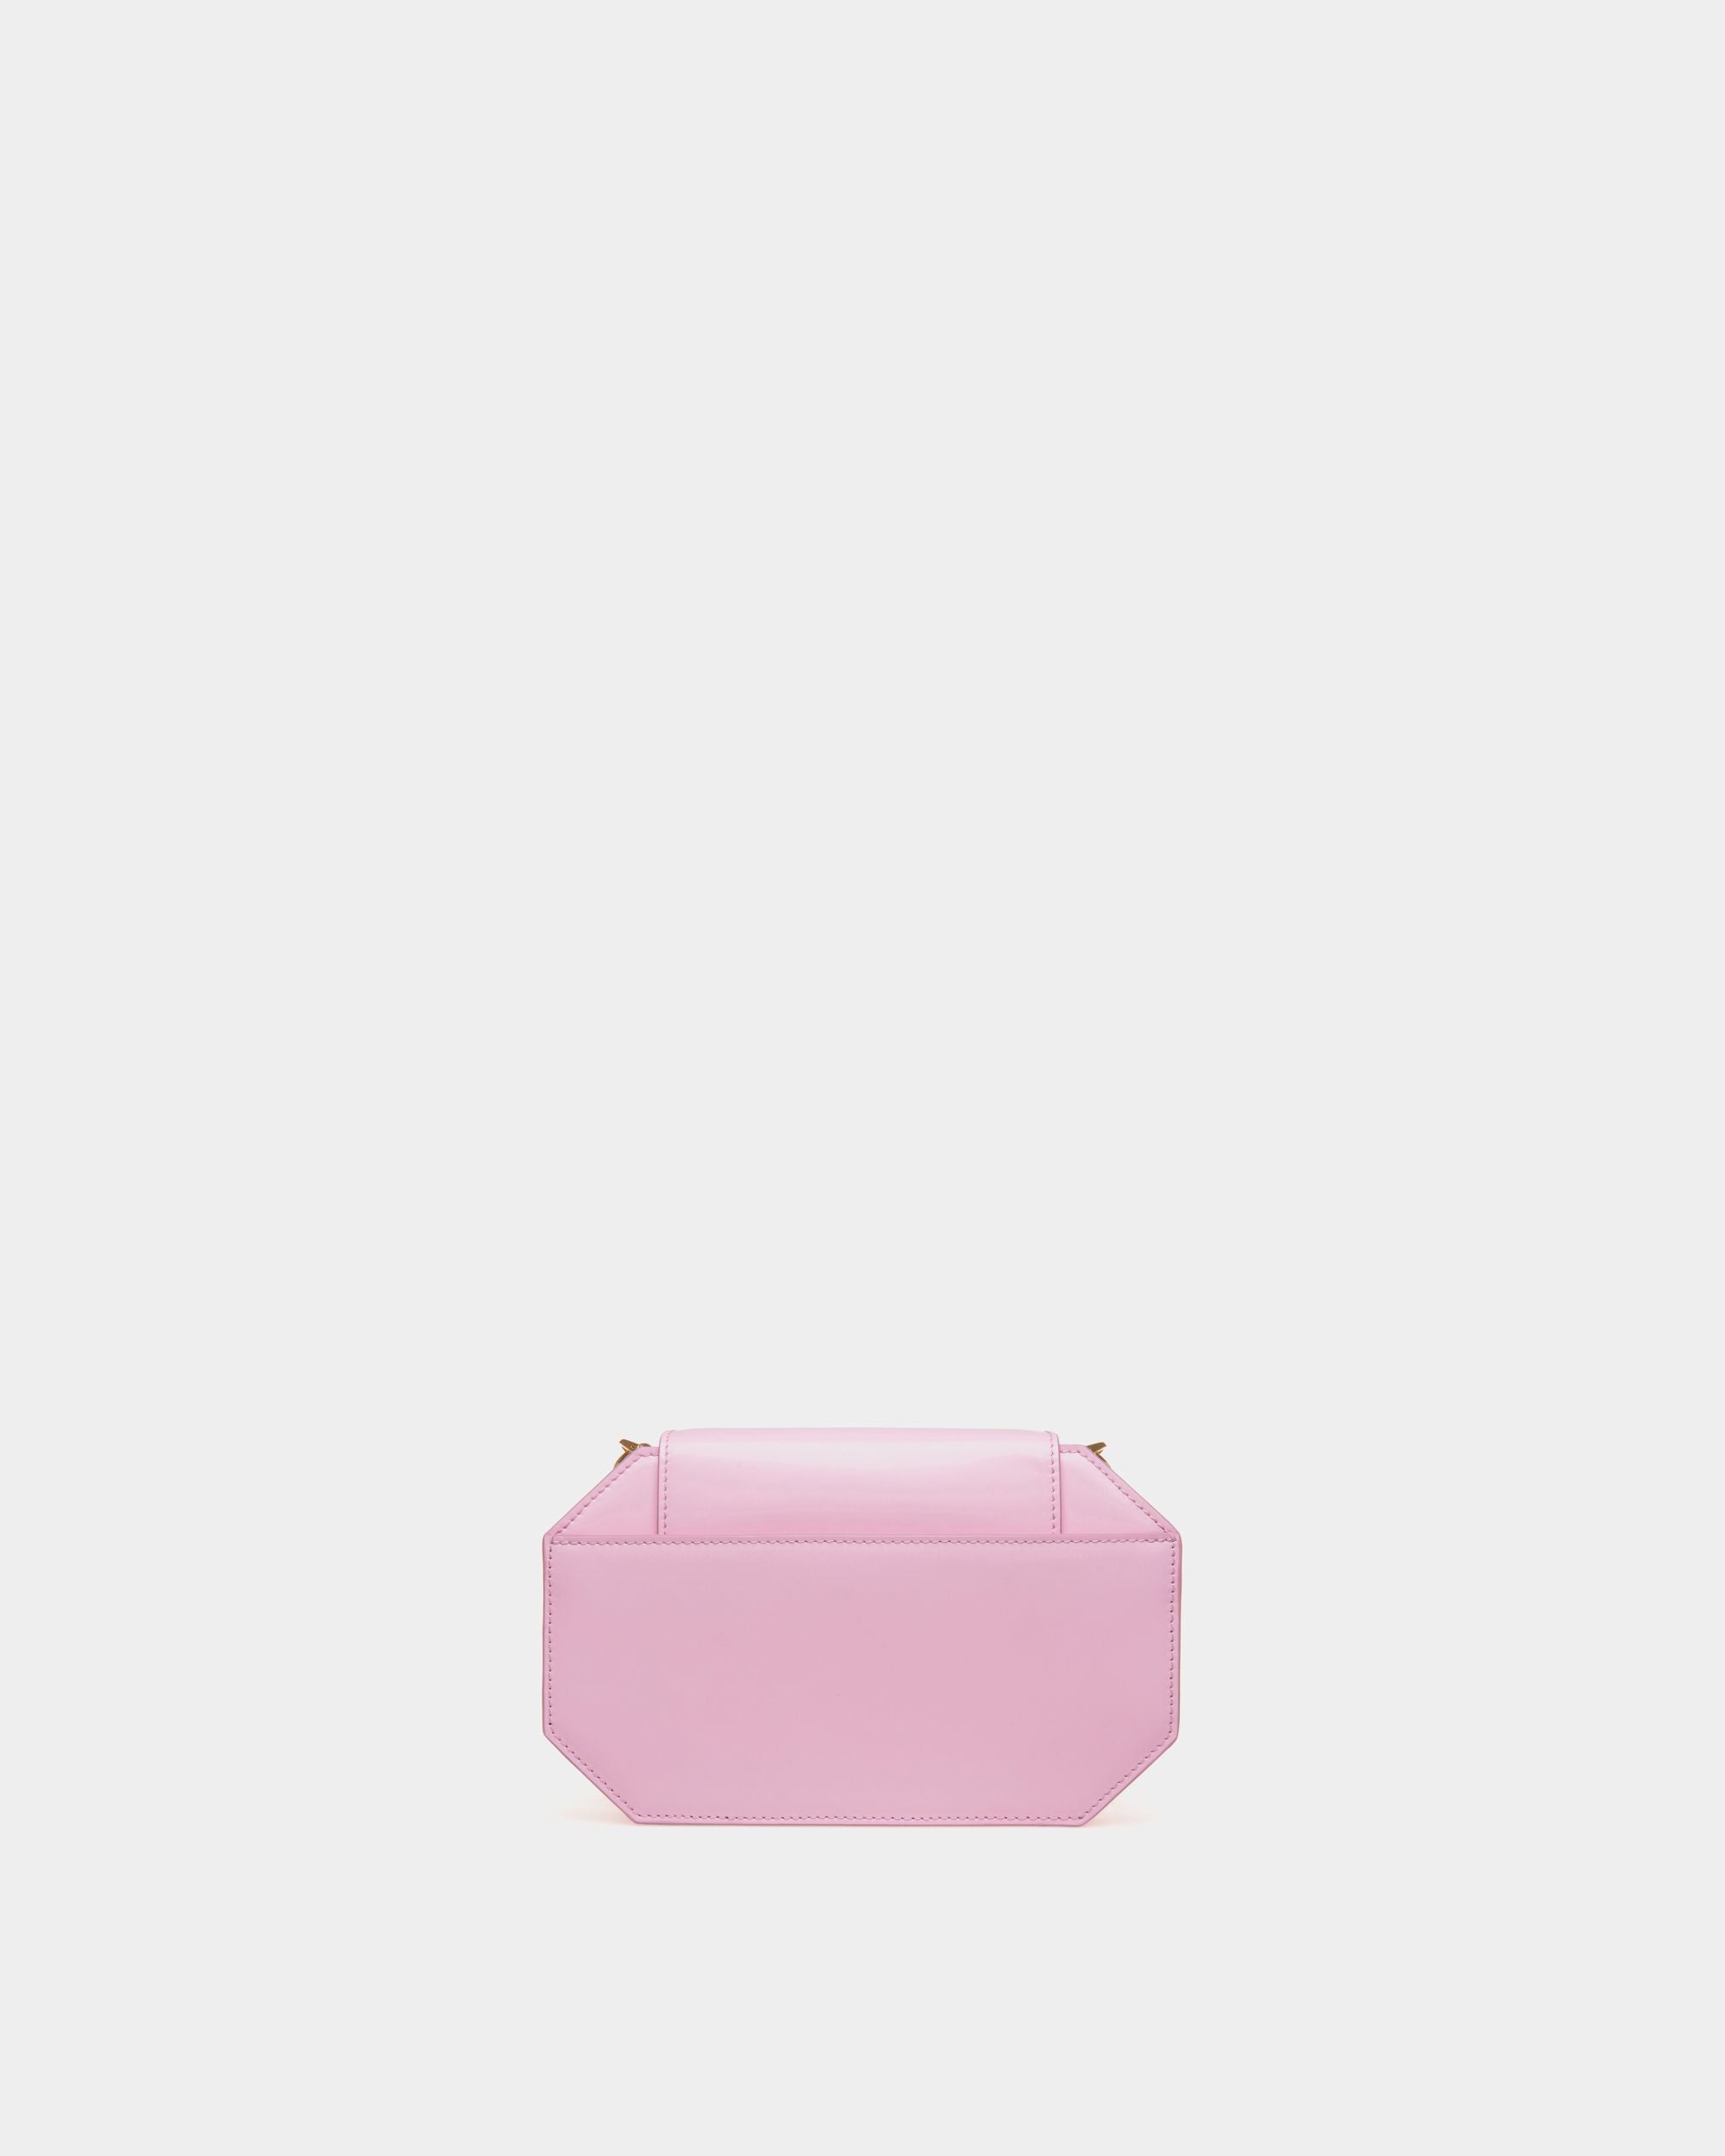 Emblem | Women's Mini Bag in Pink Brushed Leather | Bally | Still Life Back